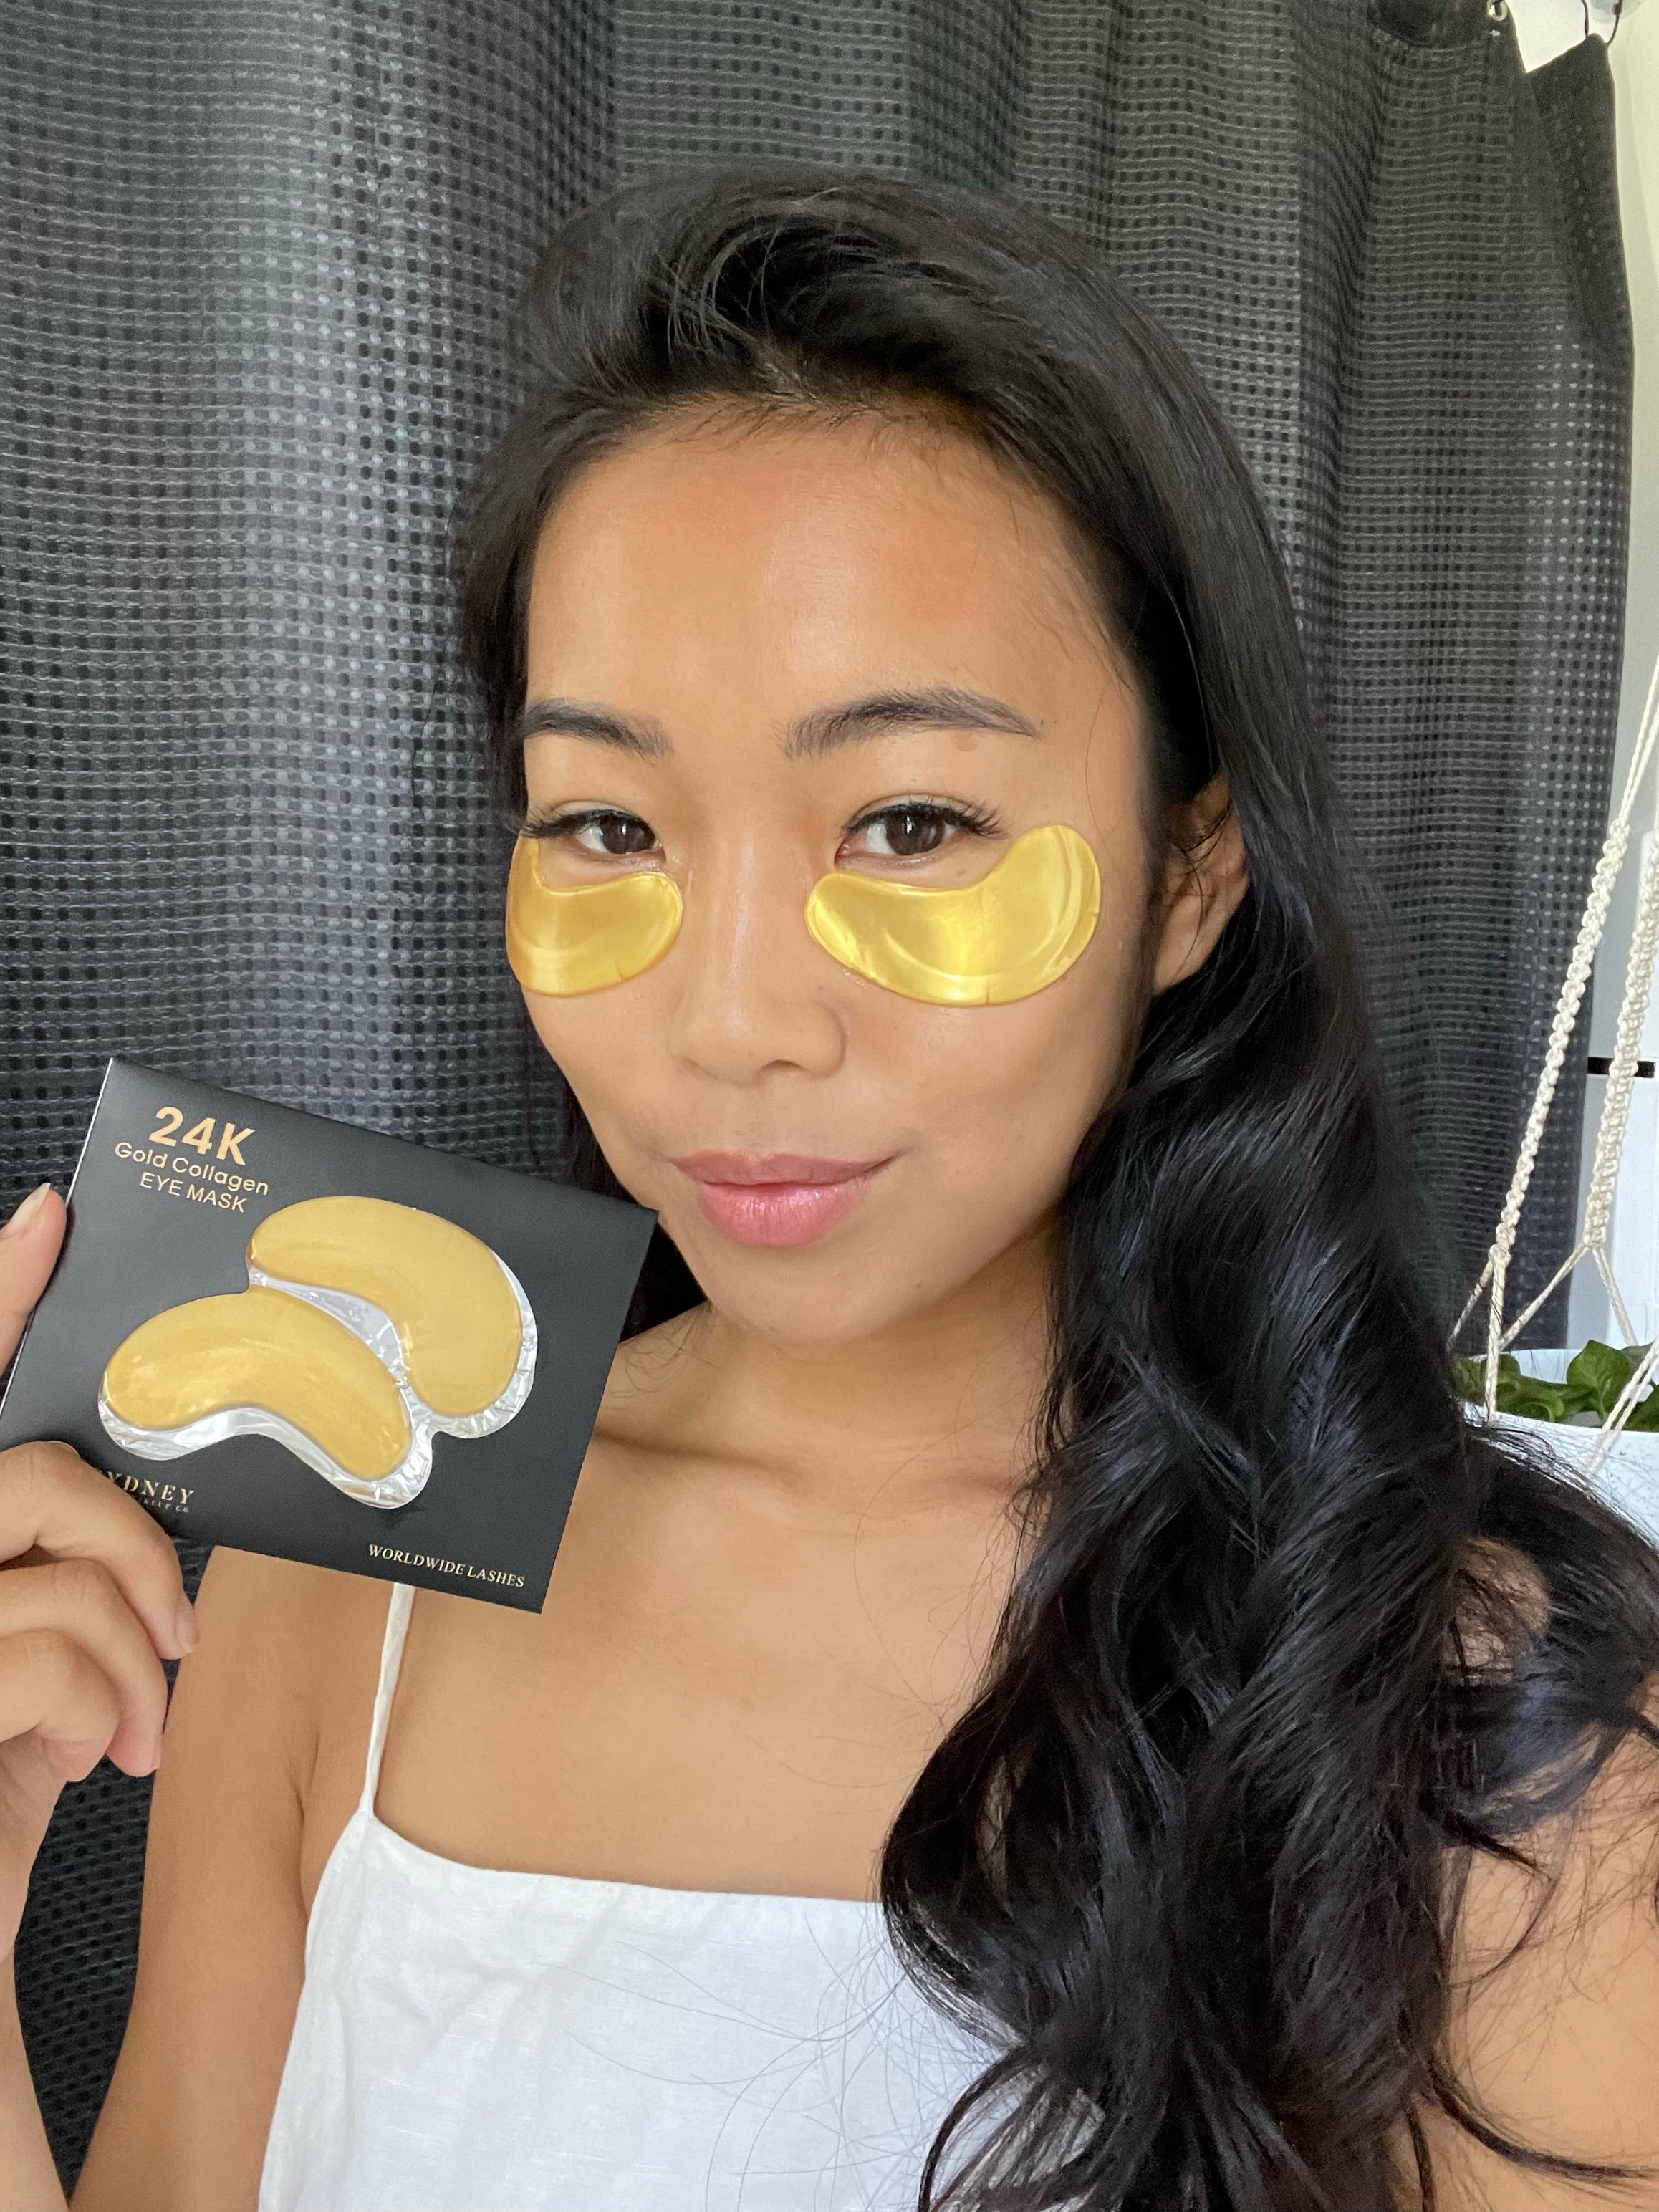 24K Gold Collagen Eye Mask